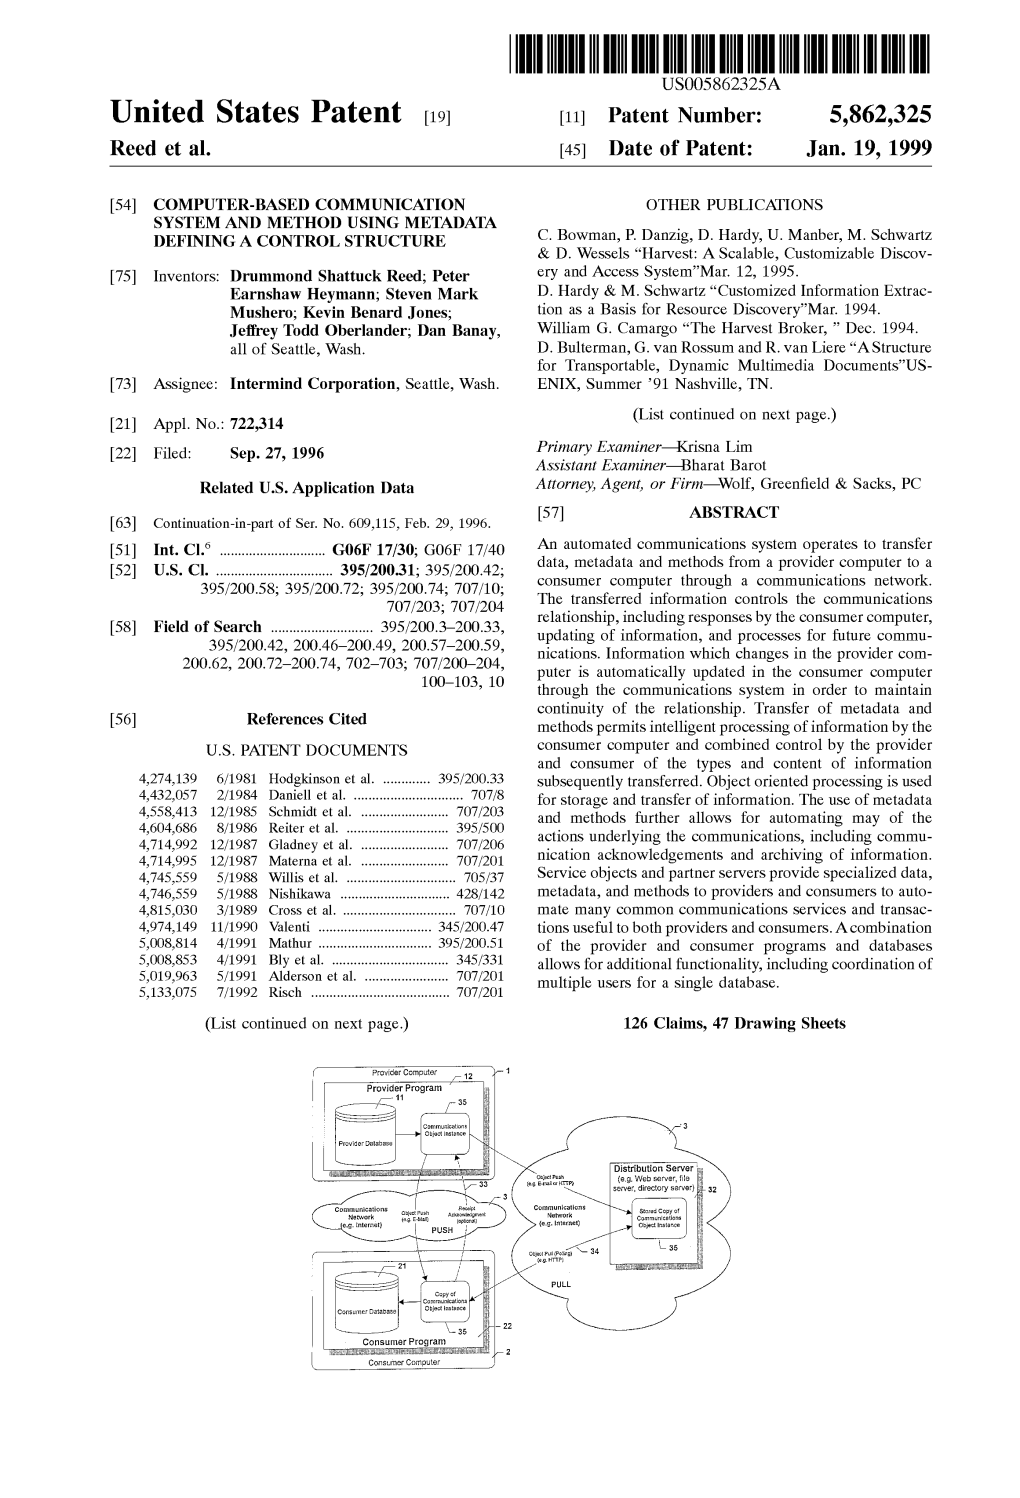 United States Patent (19) 11 Patent Number: 5,862,325 Reed Et Al